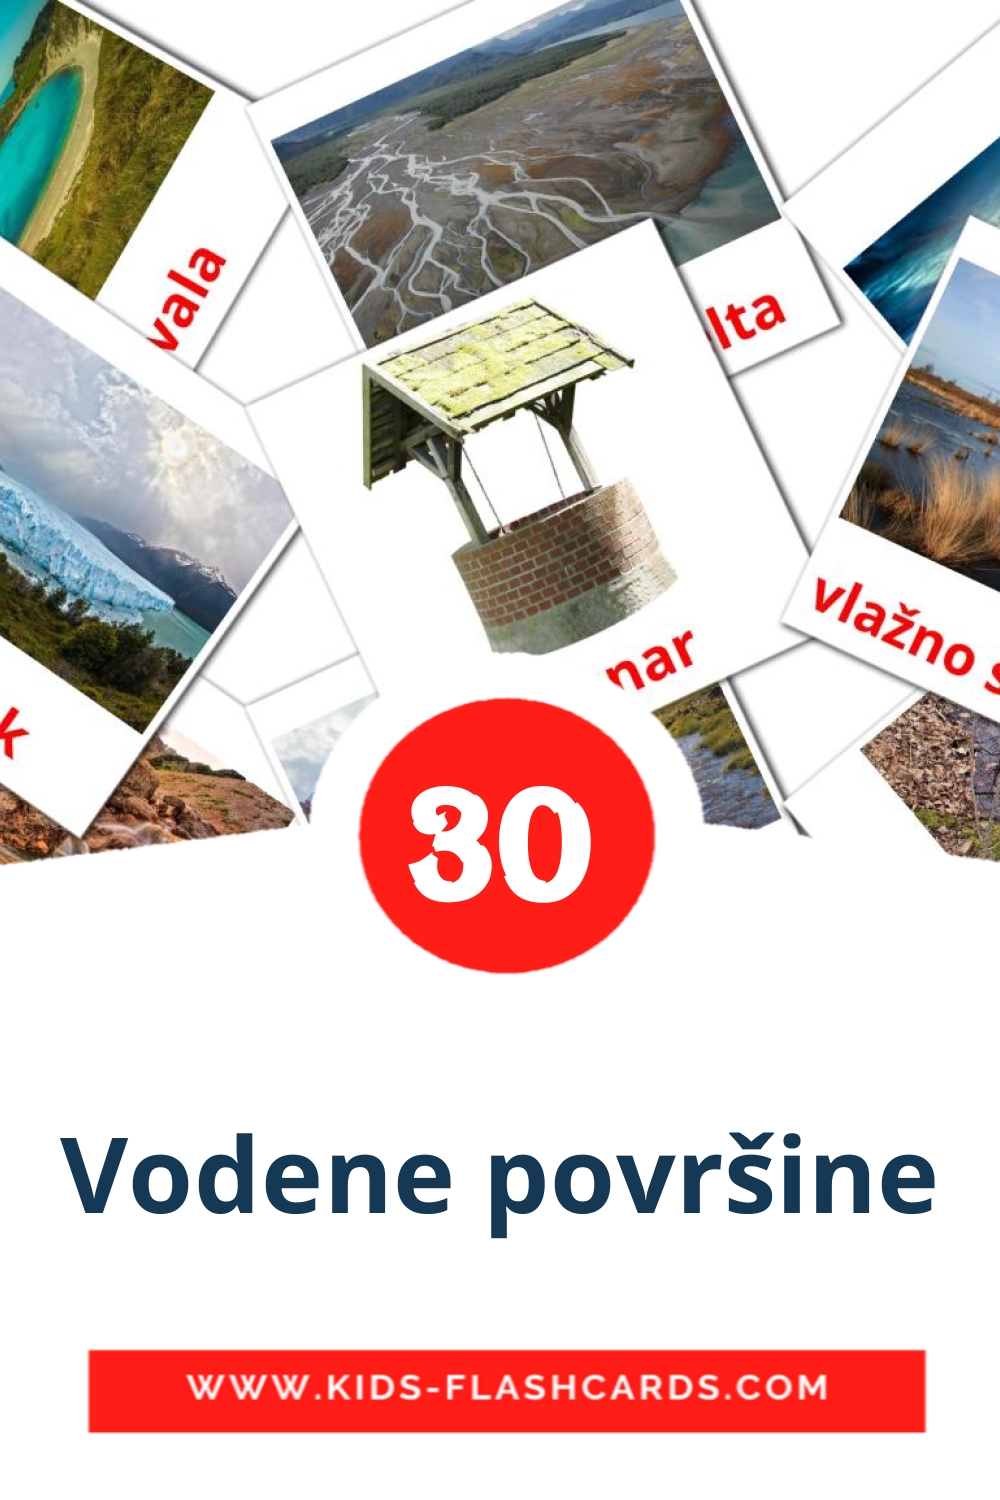 Vodene površine на хорватском для Детского Сада (30 карточек)